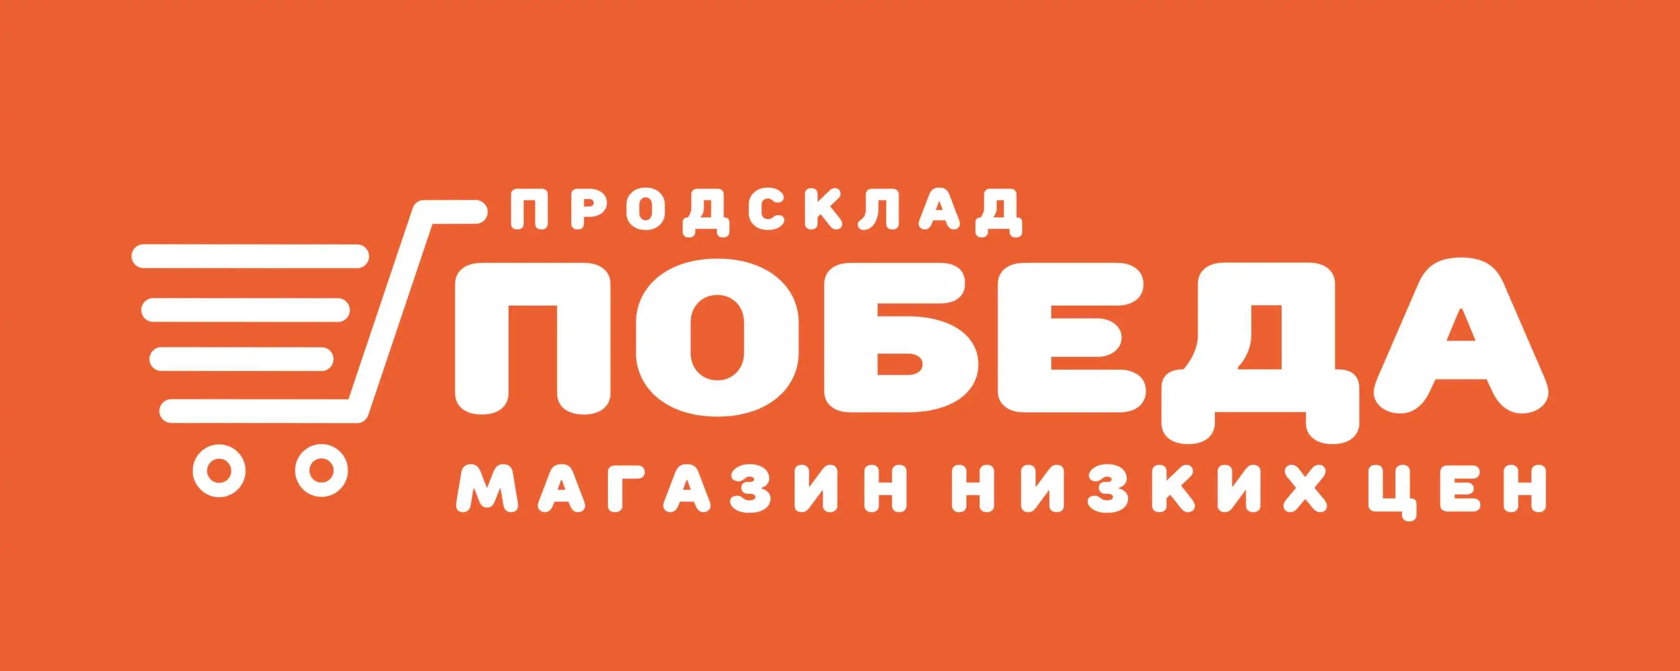 Магазин победа Ульяновск логотип. Продсклад победа. Сеть победа. Победа супермаркет логотип.